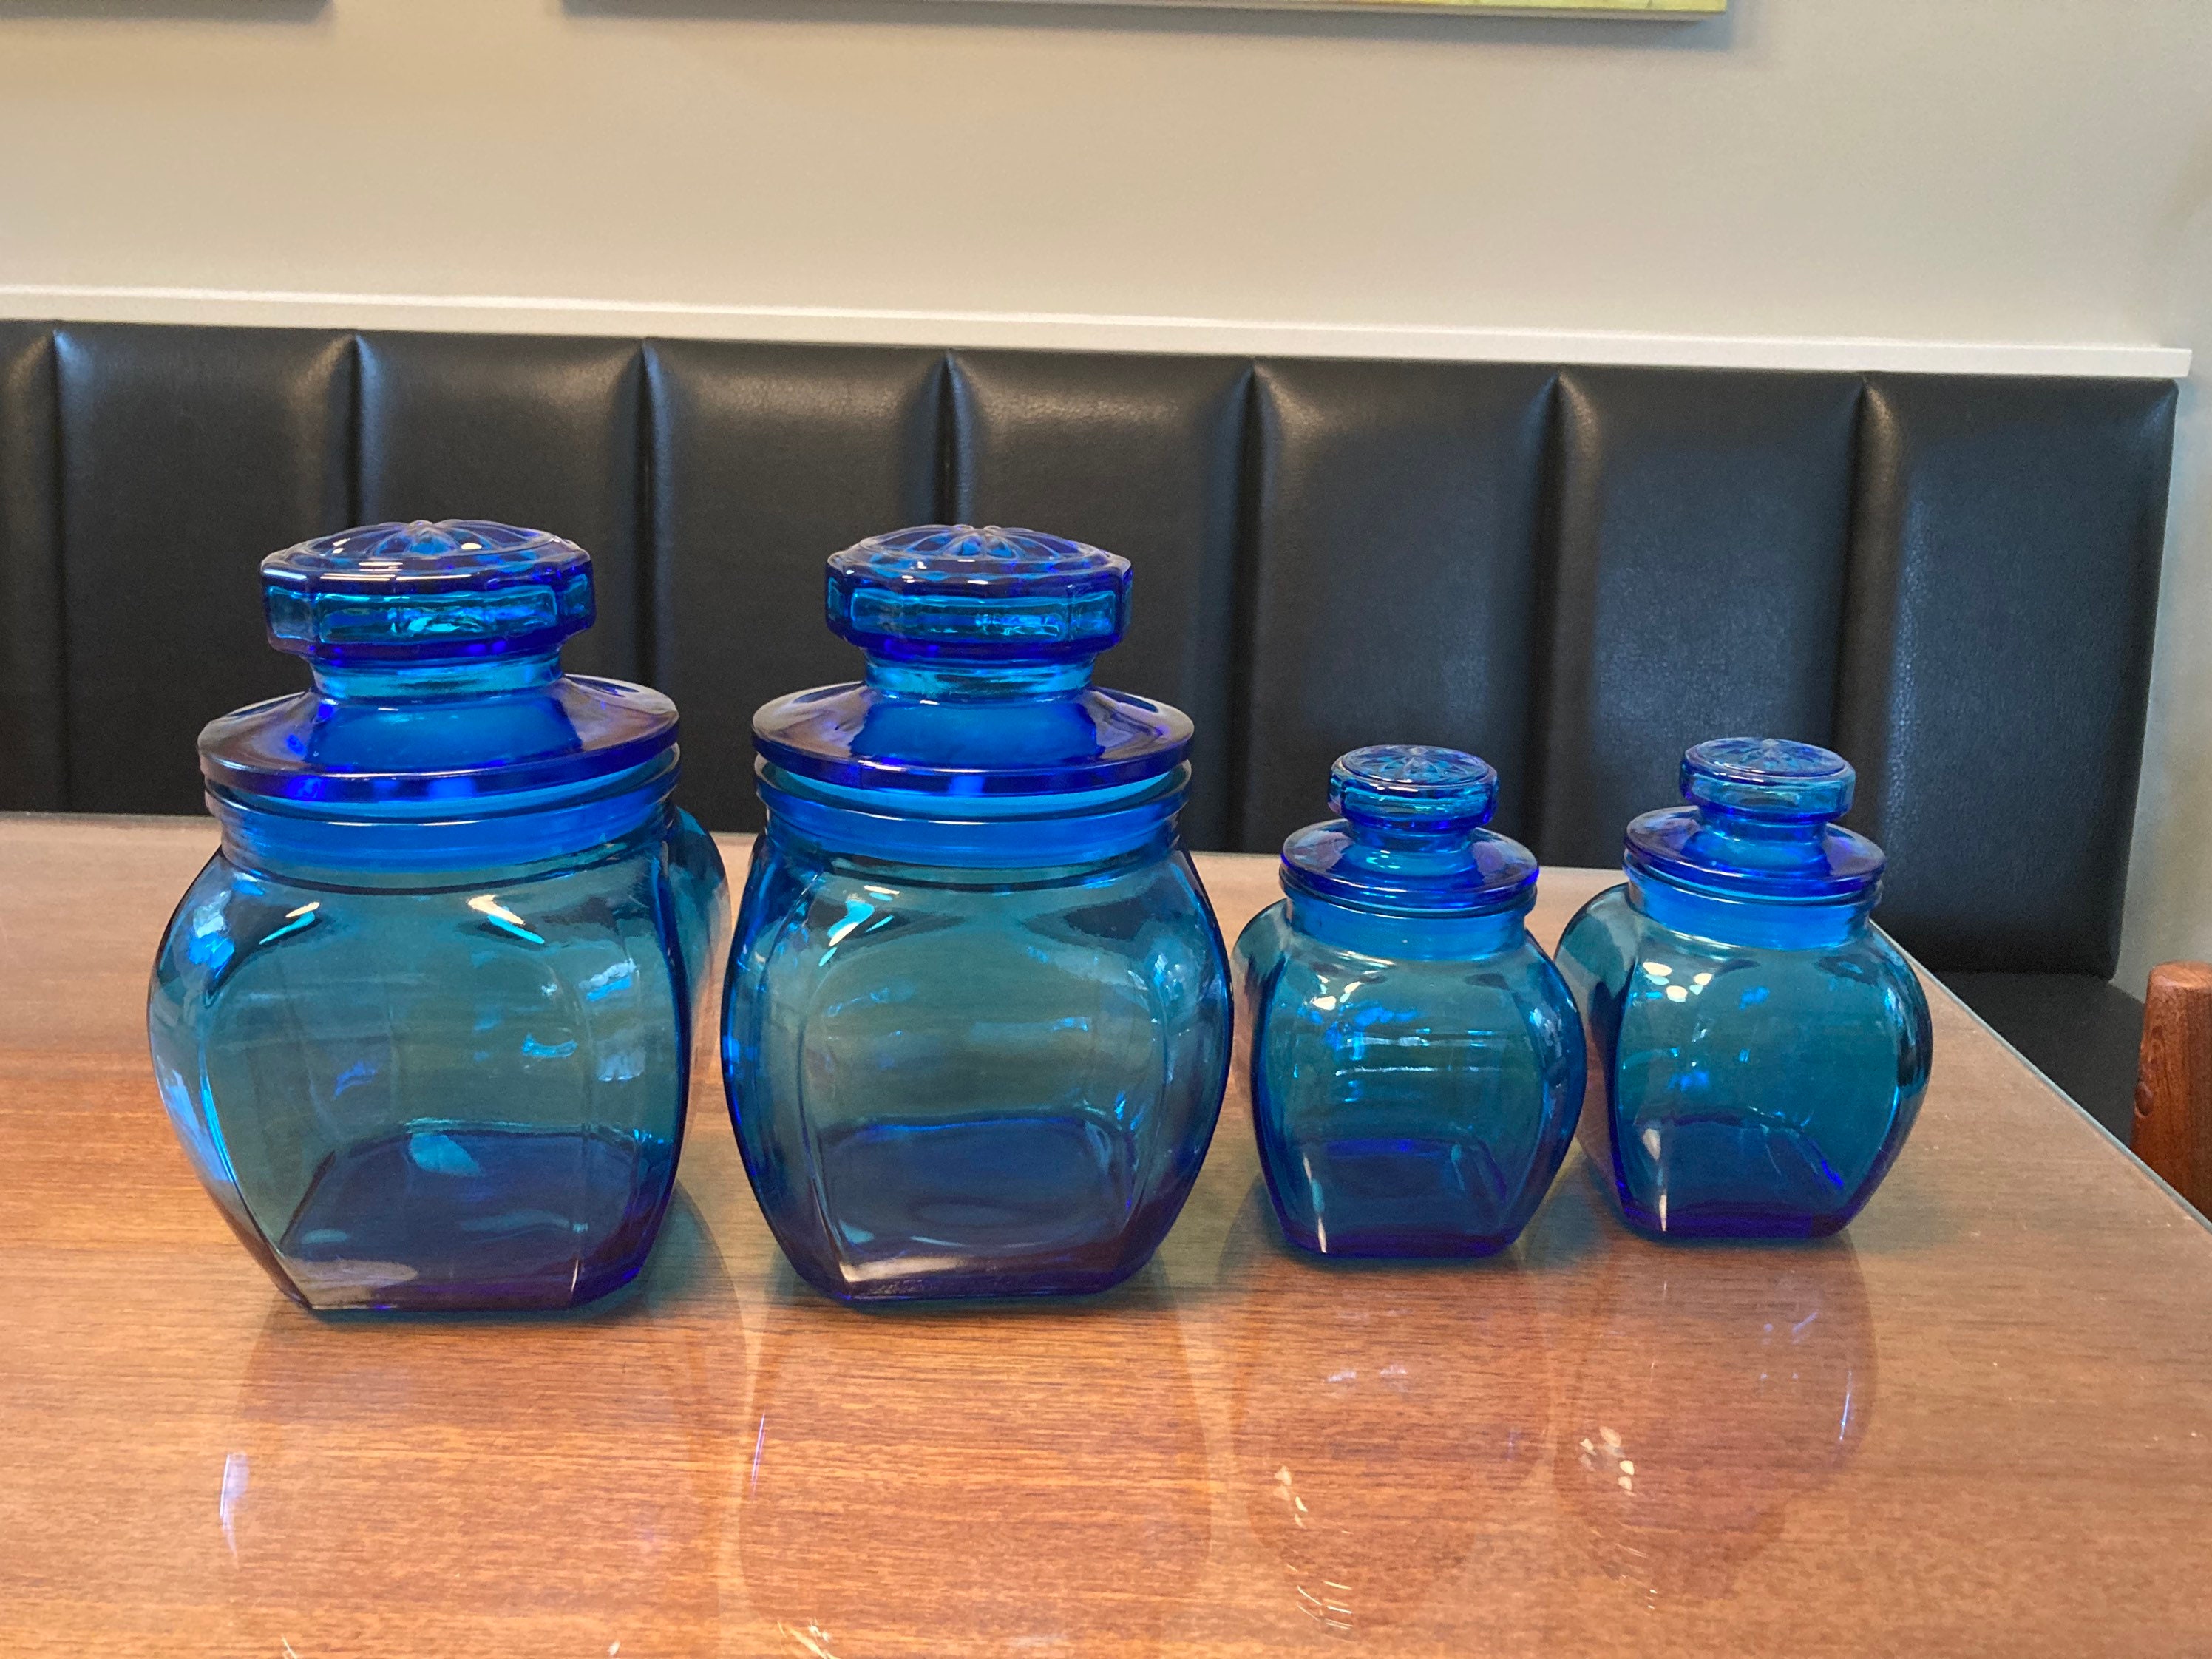 Vintage Glass Airtight Storage Jar, 34 FL OZ Glass Food Storage